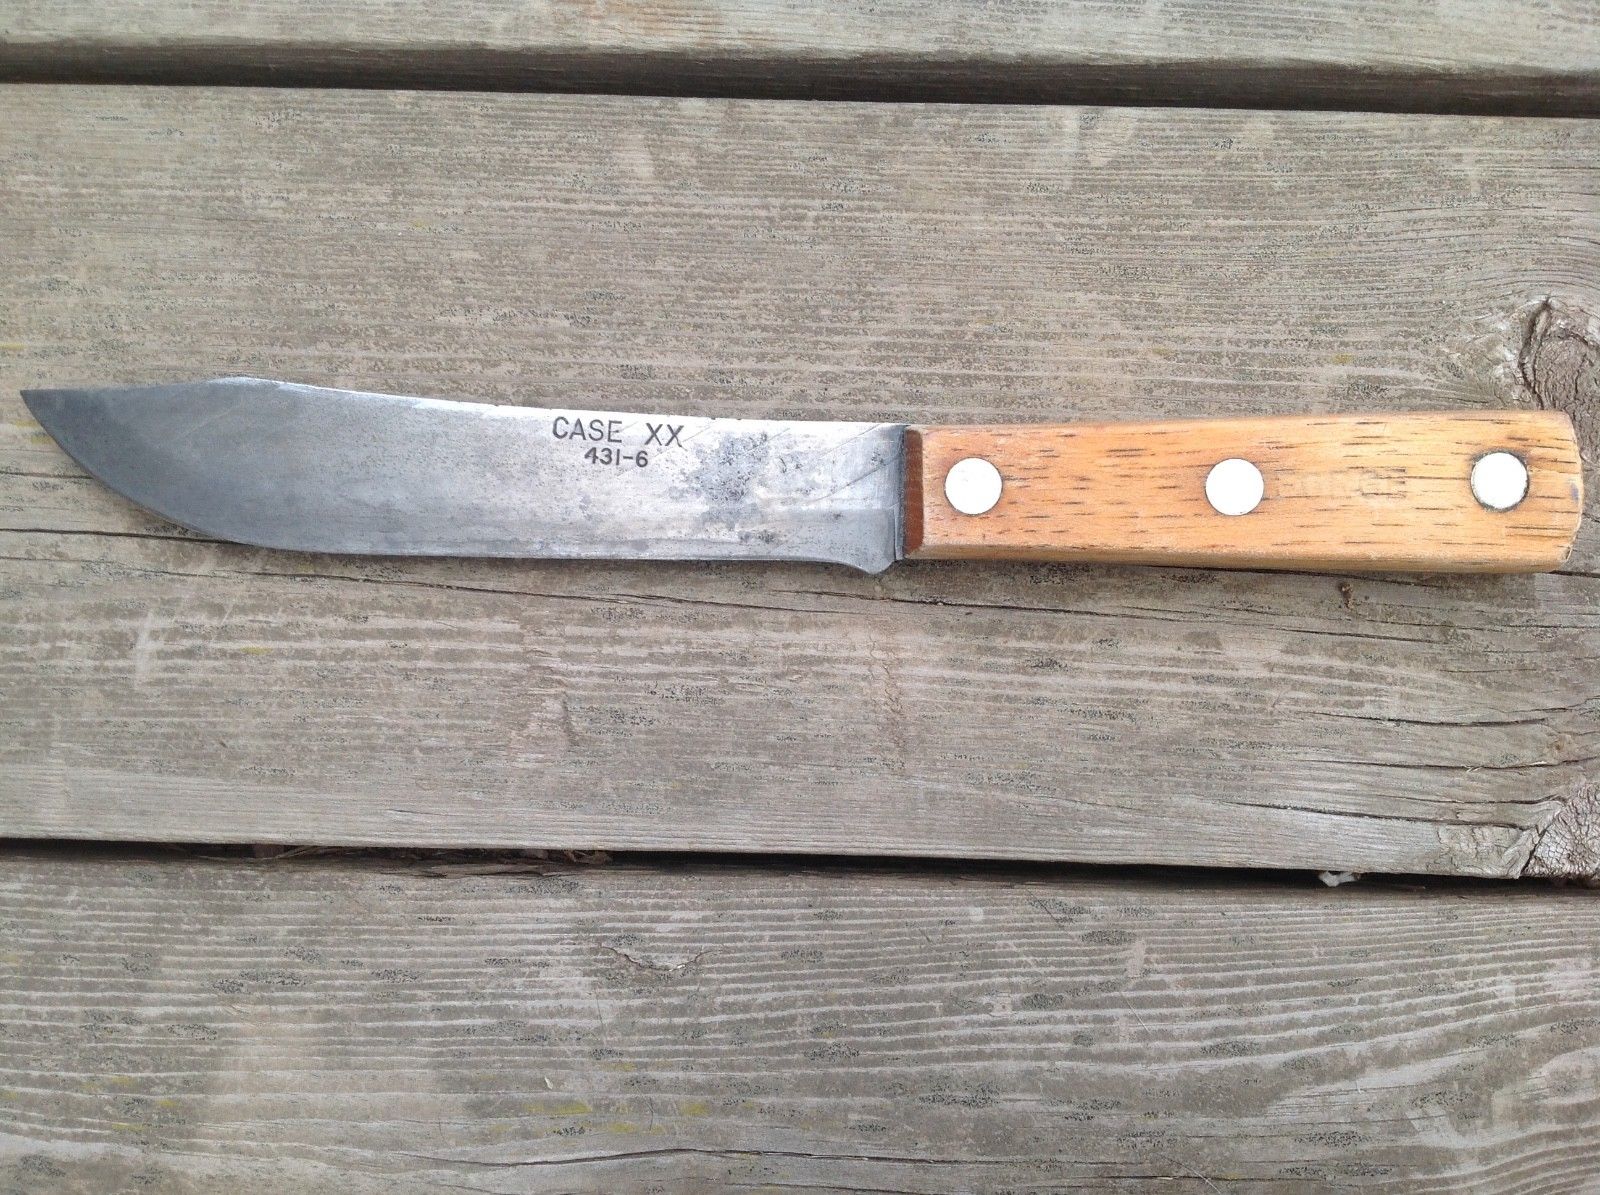 Vintage kitchen Chefs knife Case XX 431-6 BUTCHER KNIVES ANTIQUE